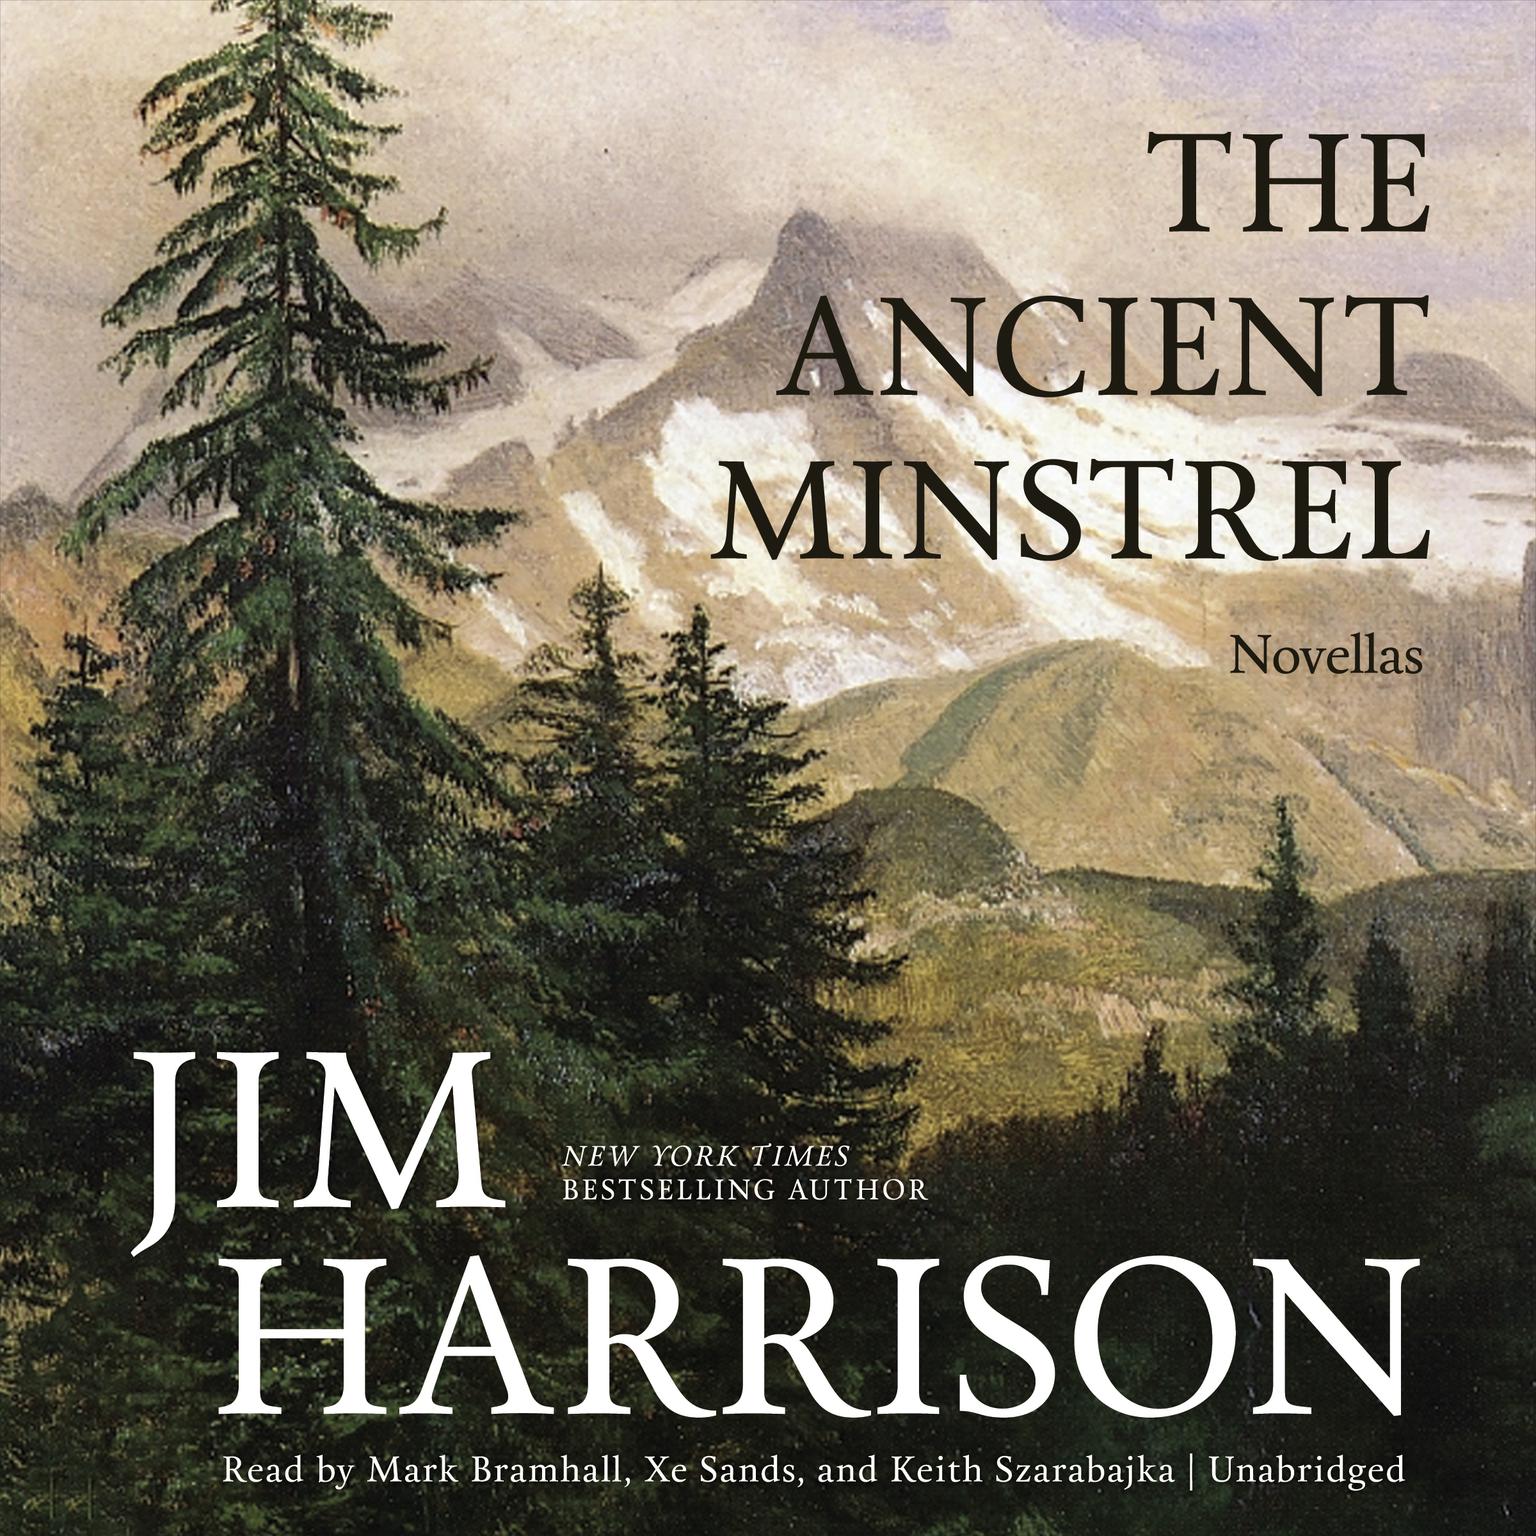 The Ancient Minstrel: Novellas Audiobook, by Jim Harrison